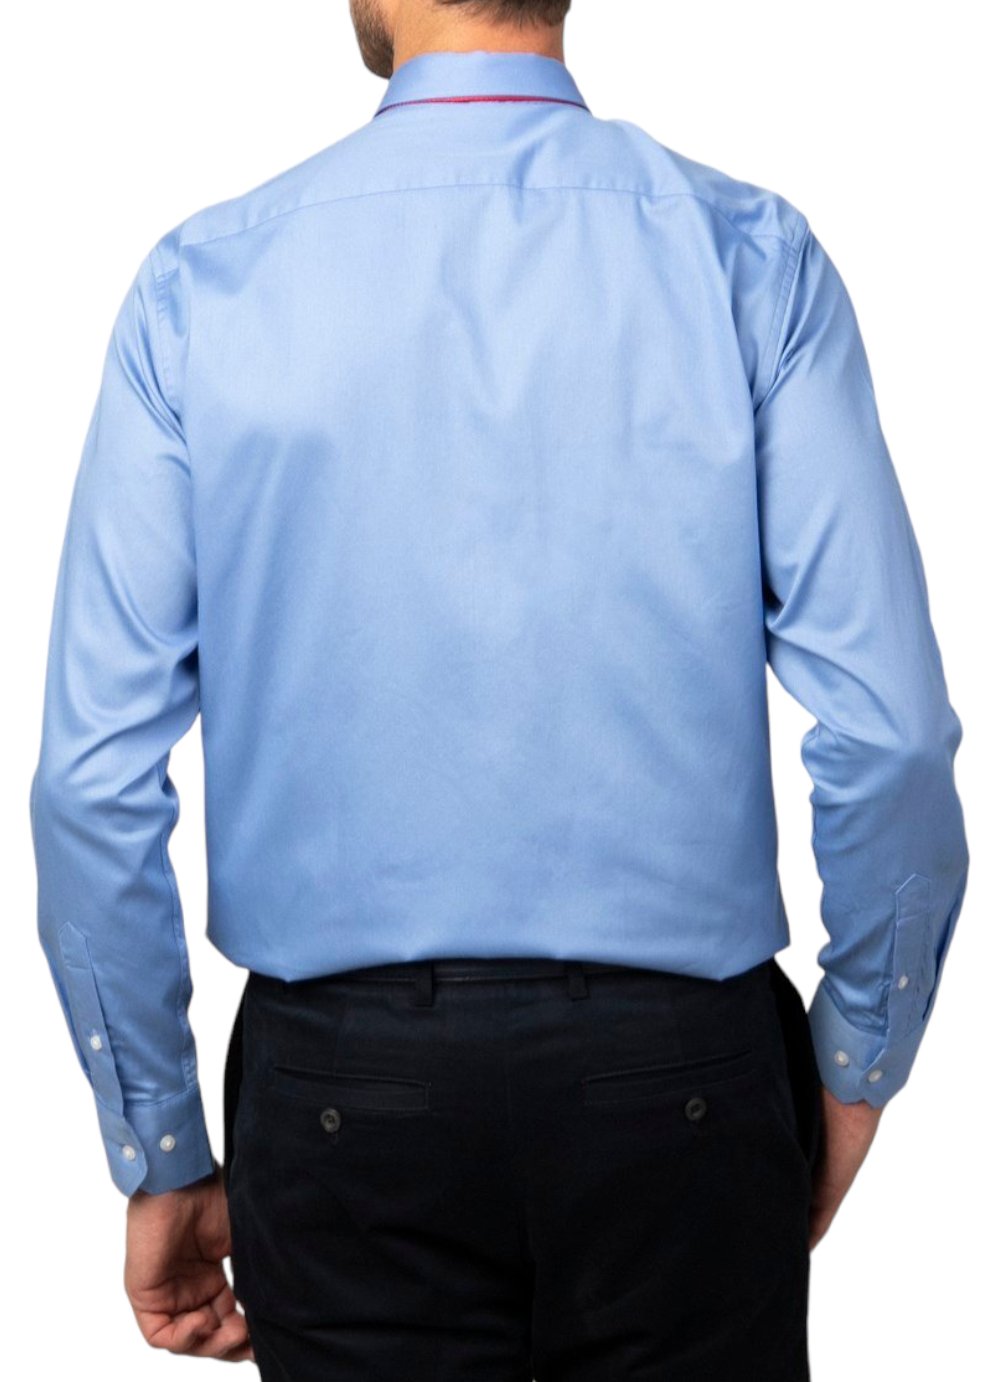 Classic Fit Blue Long Sleeve Cotton Shirt 99percenthandmade   